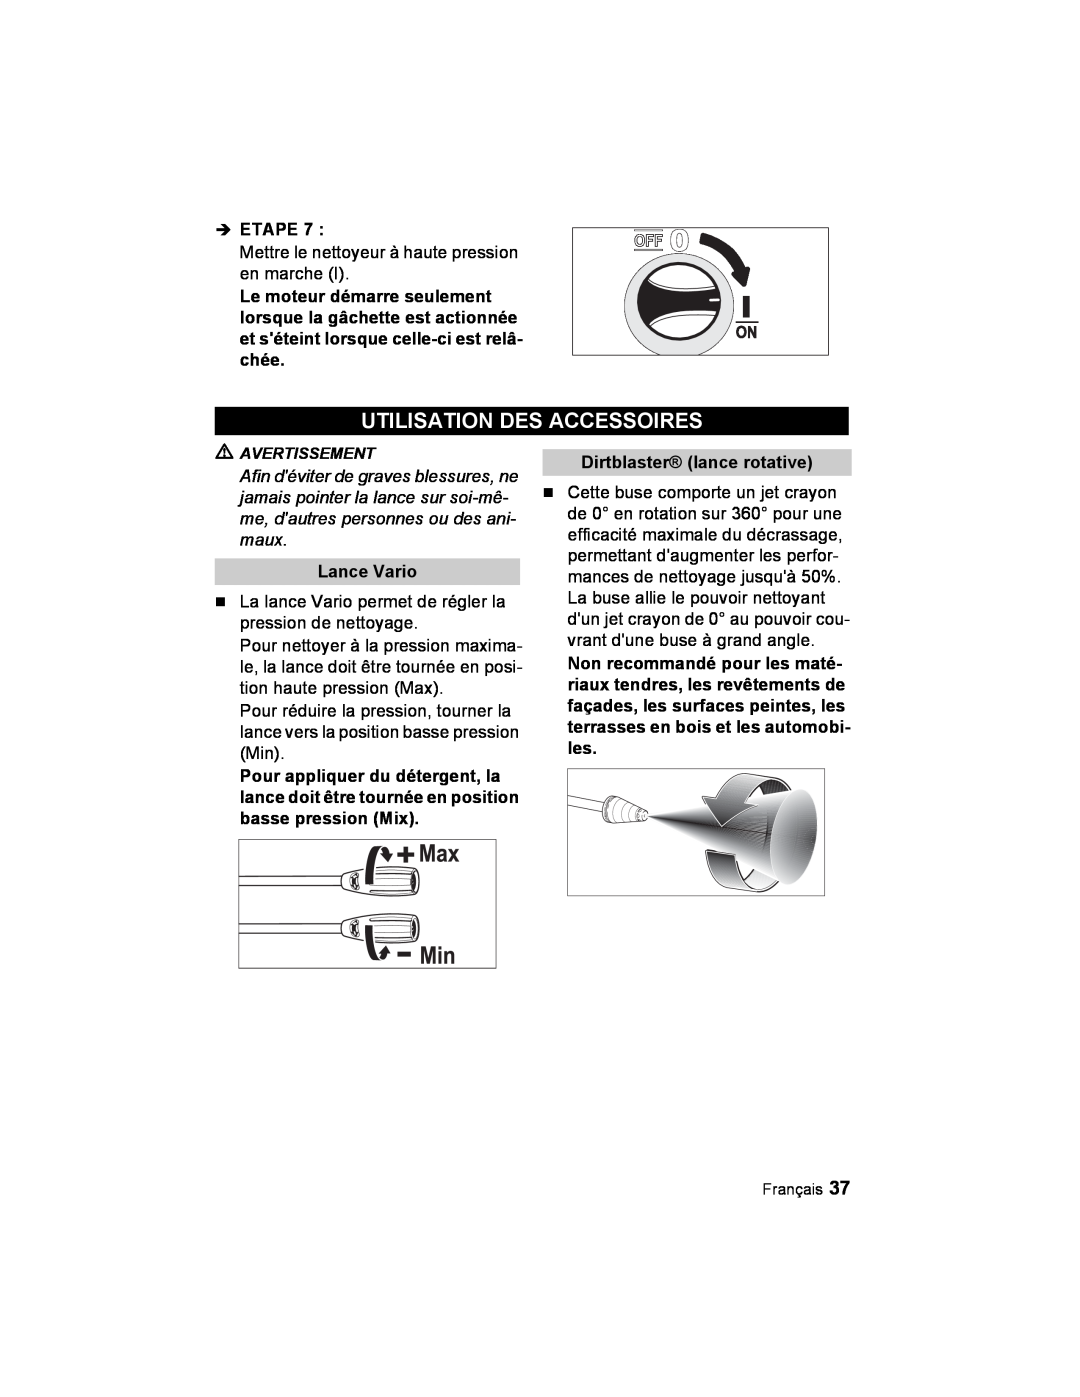 Karcher K 2.21 manual Utilisation Des Accessoires, Lance Vario, Dirtblaster lance rotative, Î Etape 